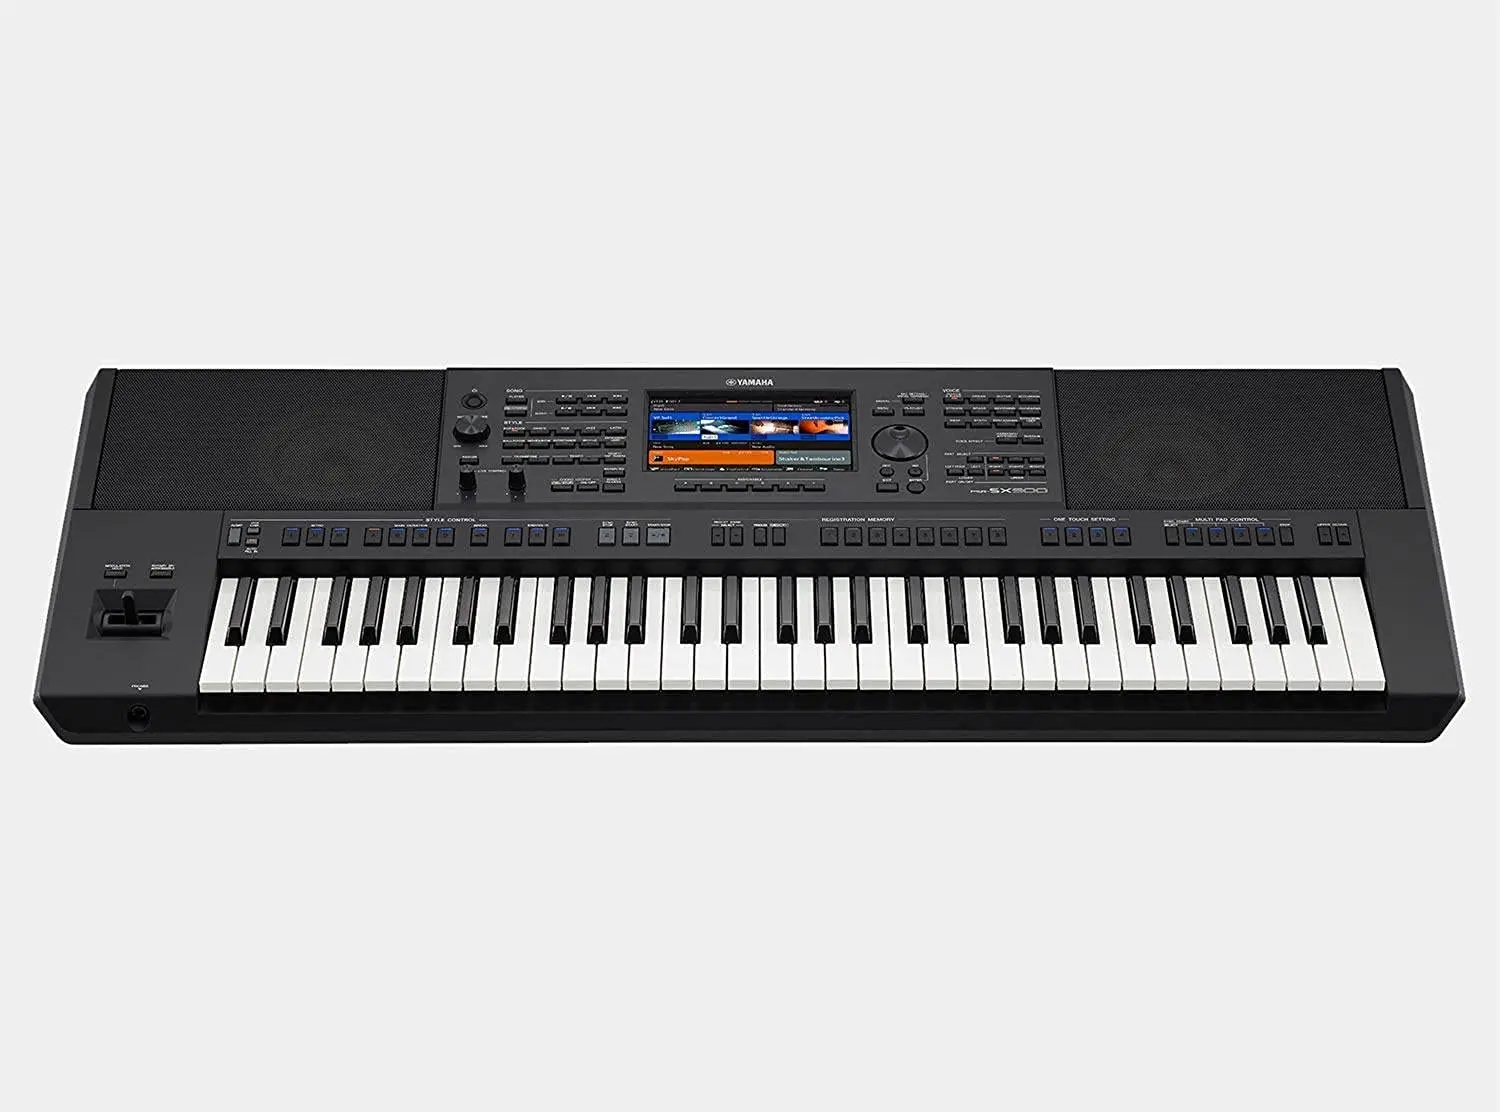 (НОВЫЙ бренд) Набор клавиатур PSR SX900 S975 SX700 S970 Deluxe keyboards2